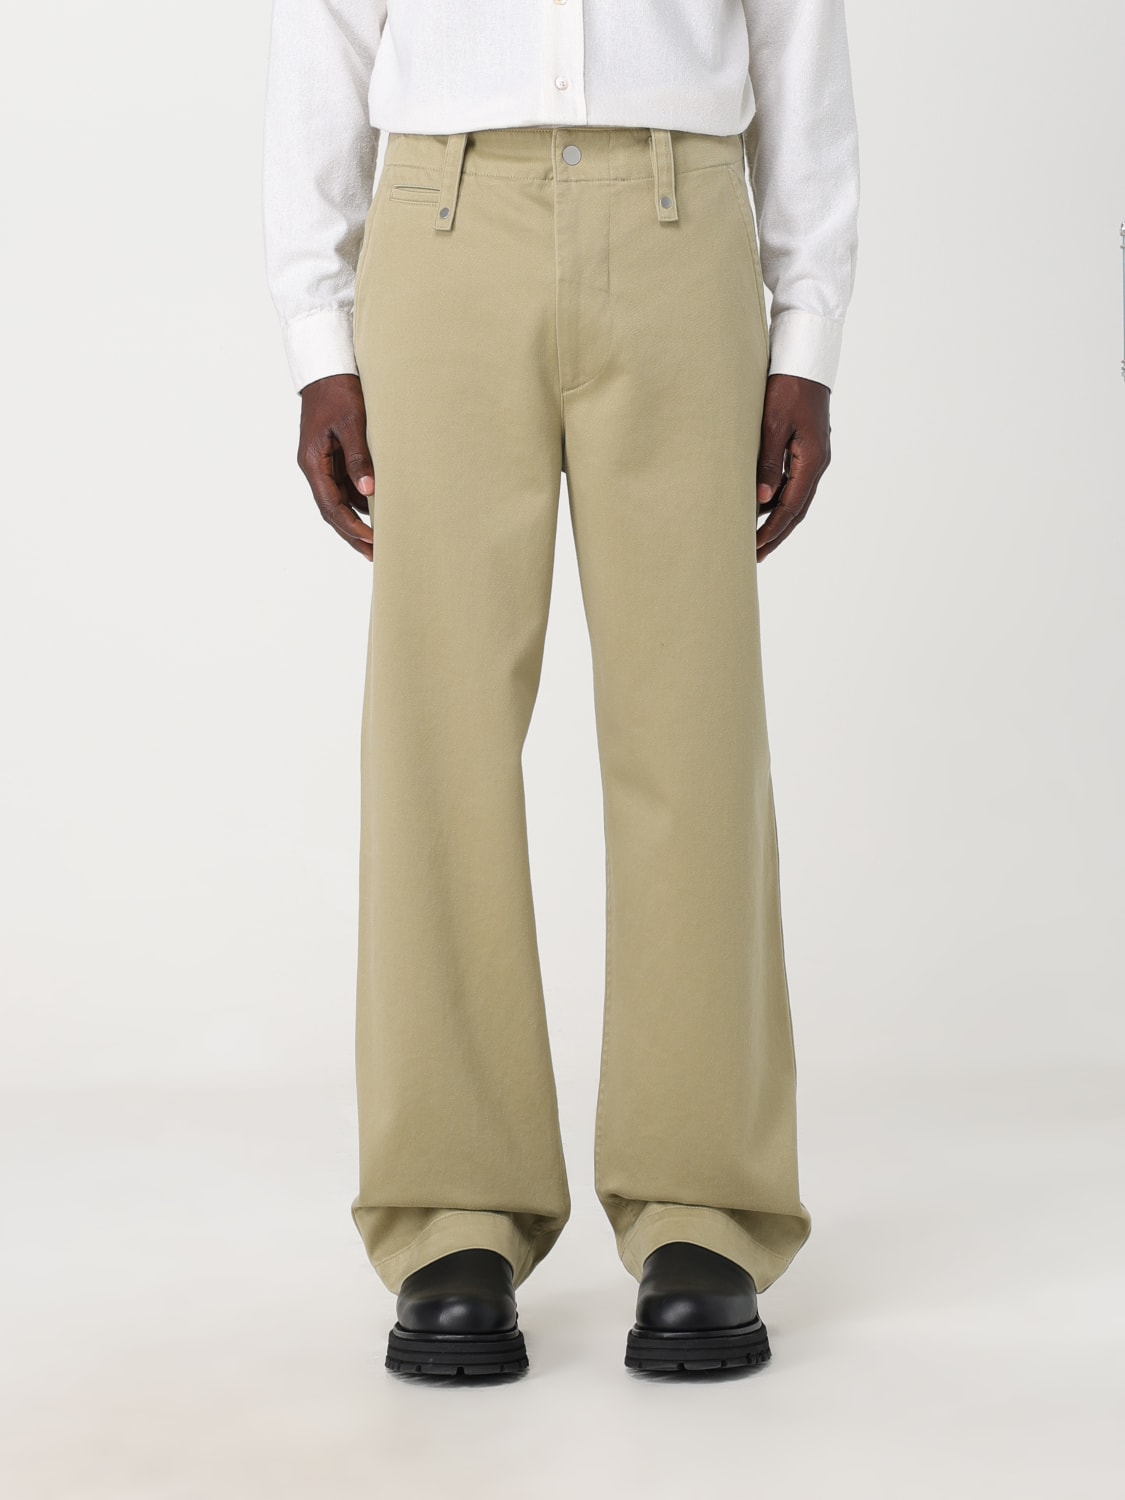 Burberry pants for Men